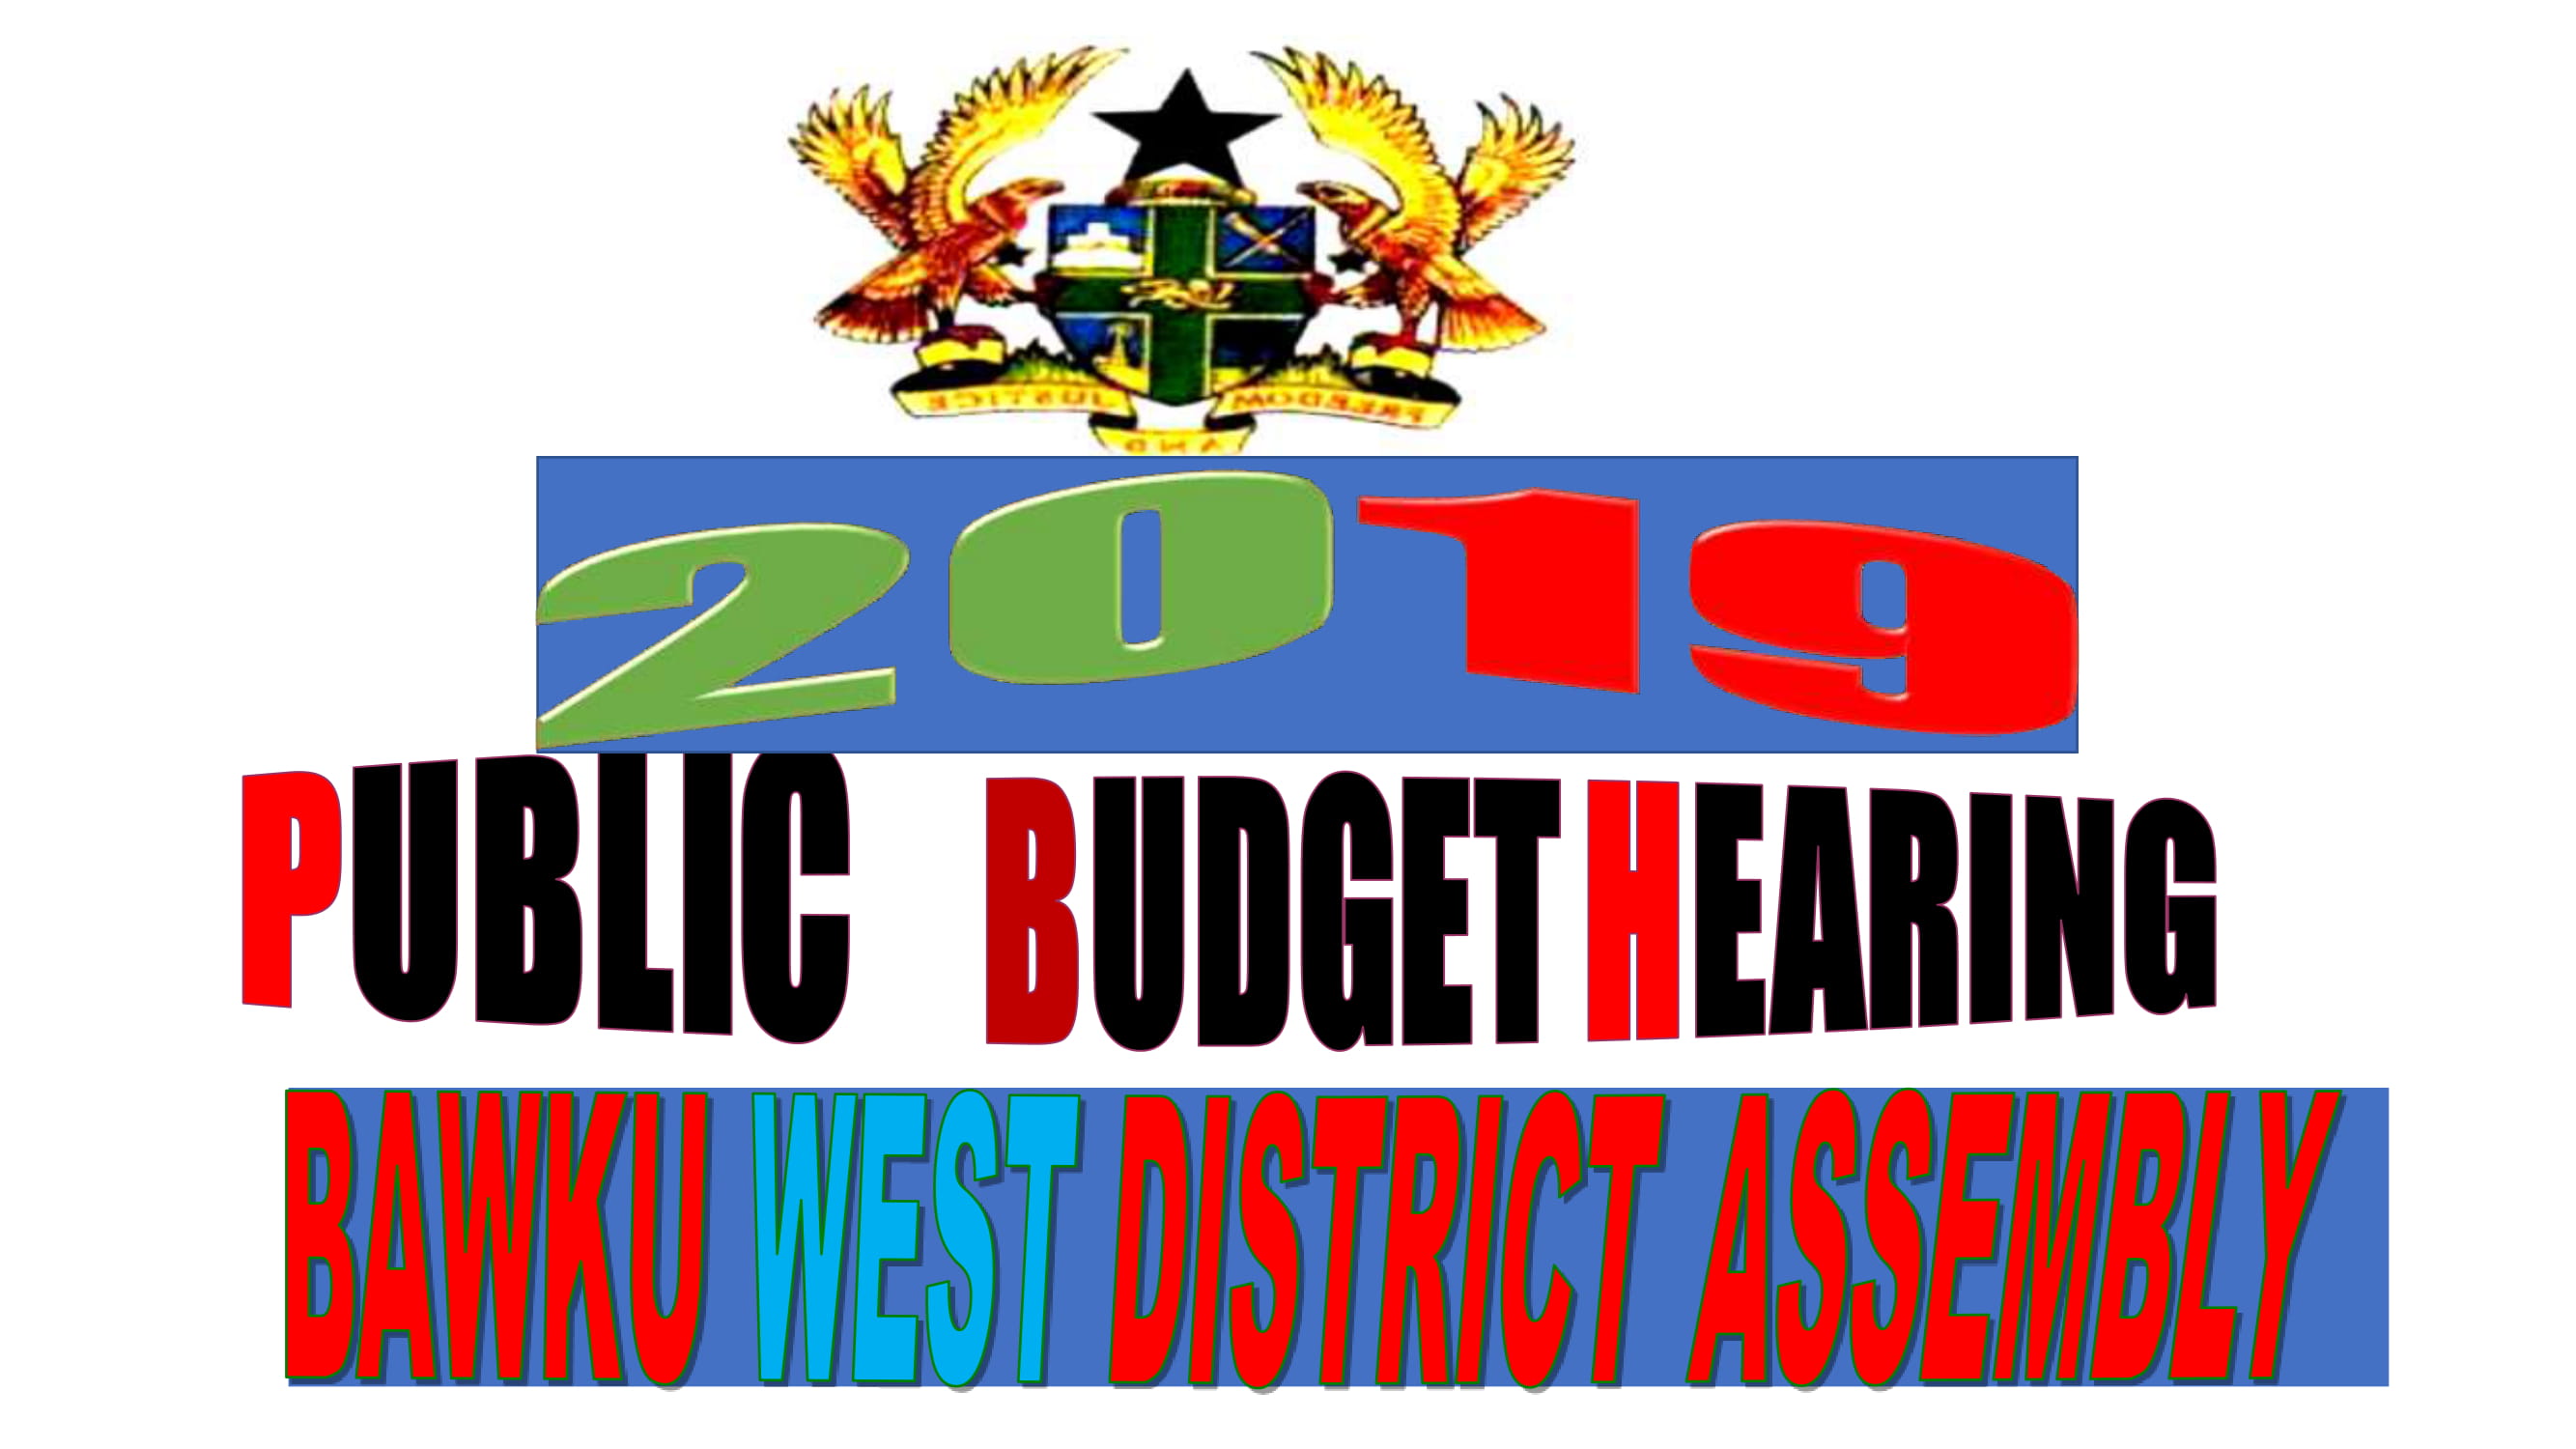 Bawku West Public Budget Hearing 2019(1)